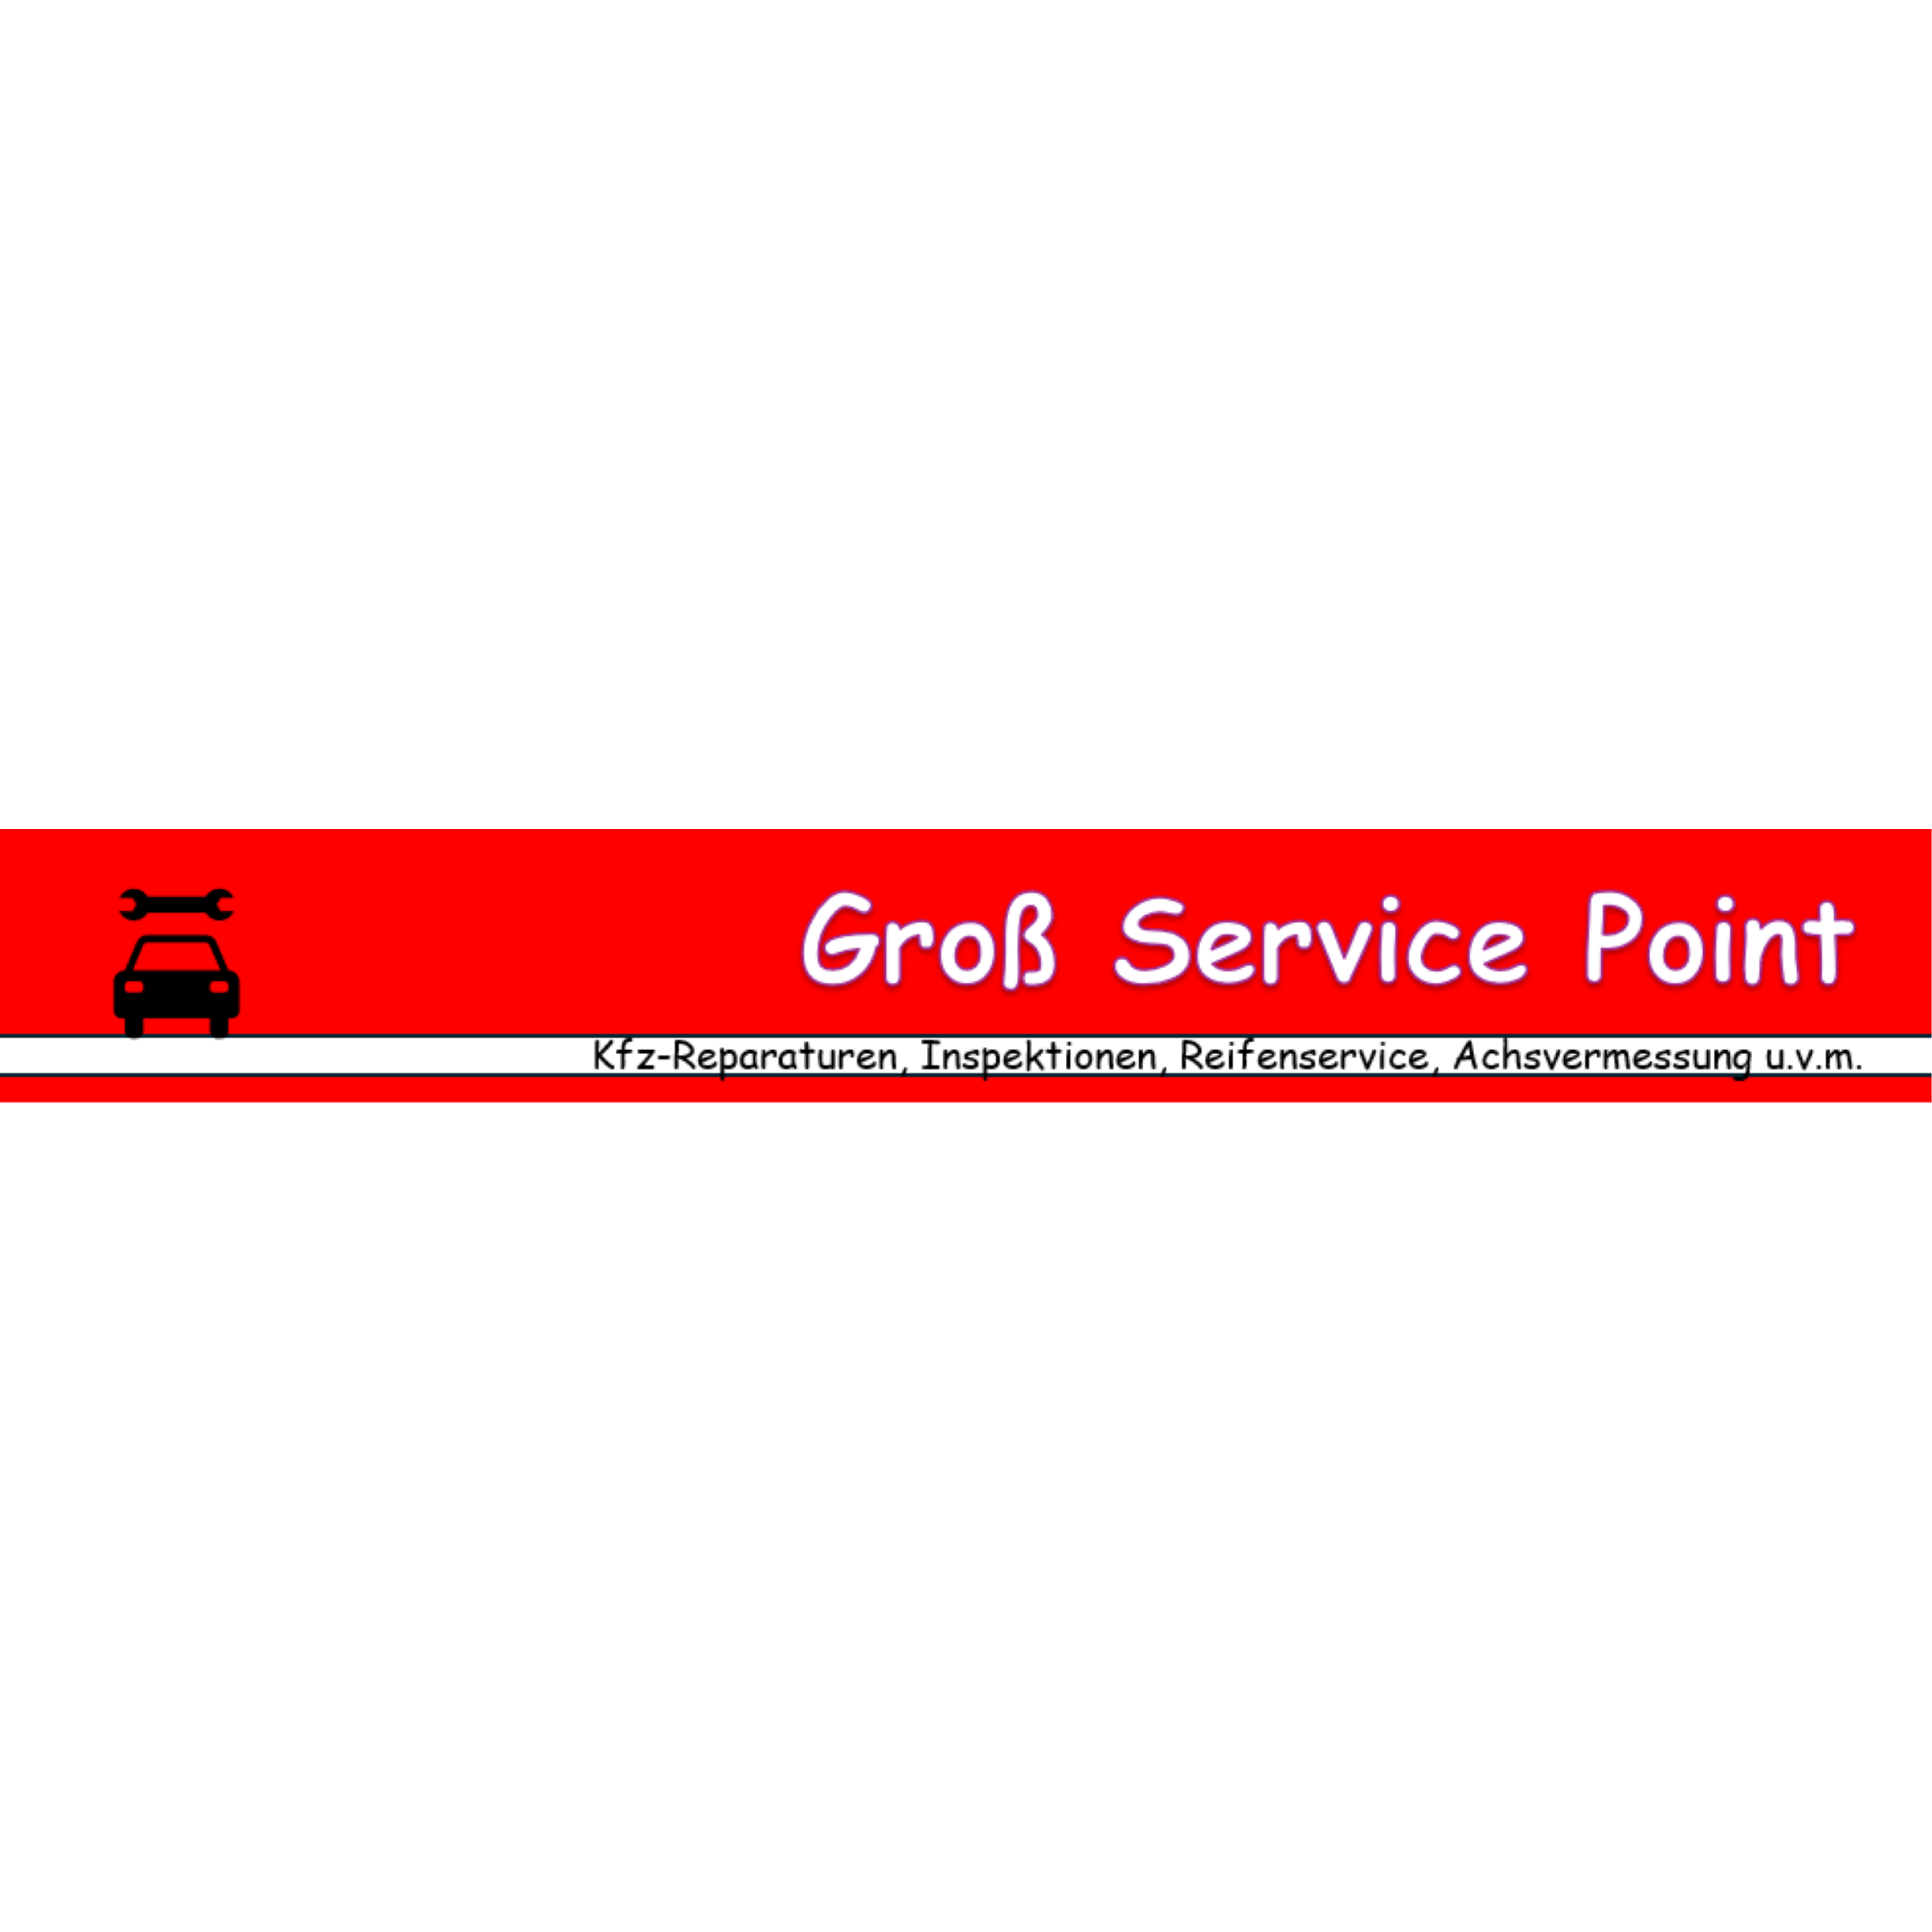 Groß Service Point in Mosbach in Baden - Logo